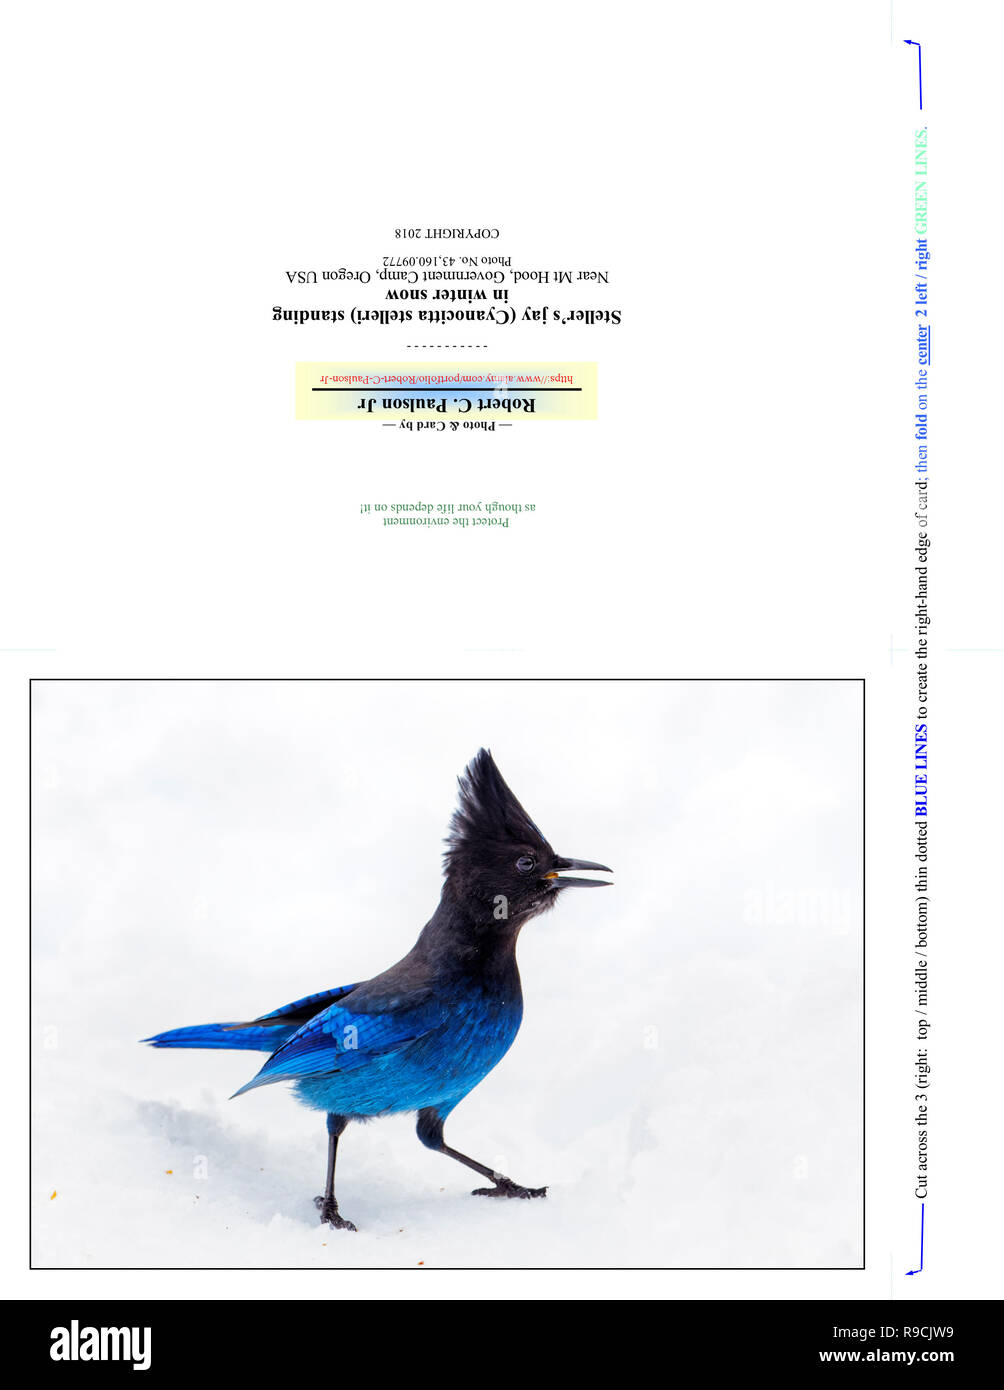 Nota Fotografía 43,160.09772 Card (Print cut plegado para 7x5 tarjeta fotográfica), Blue & sassy Steller's jay bird (Cyanocitta stelleri) de pie en el invierno, la nieve Foto de stock